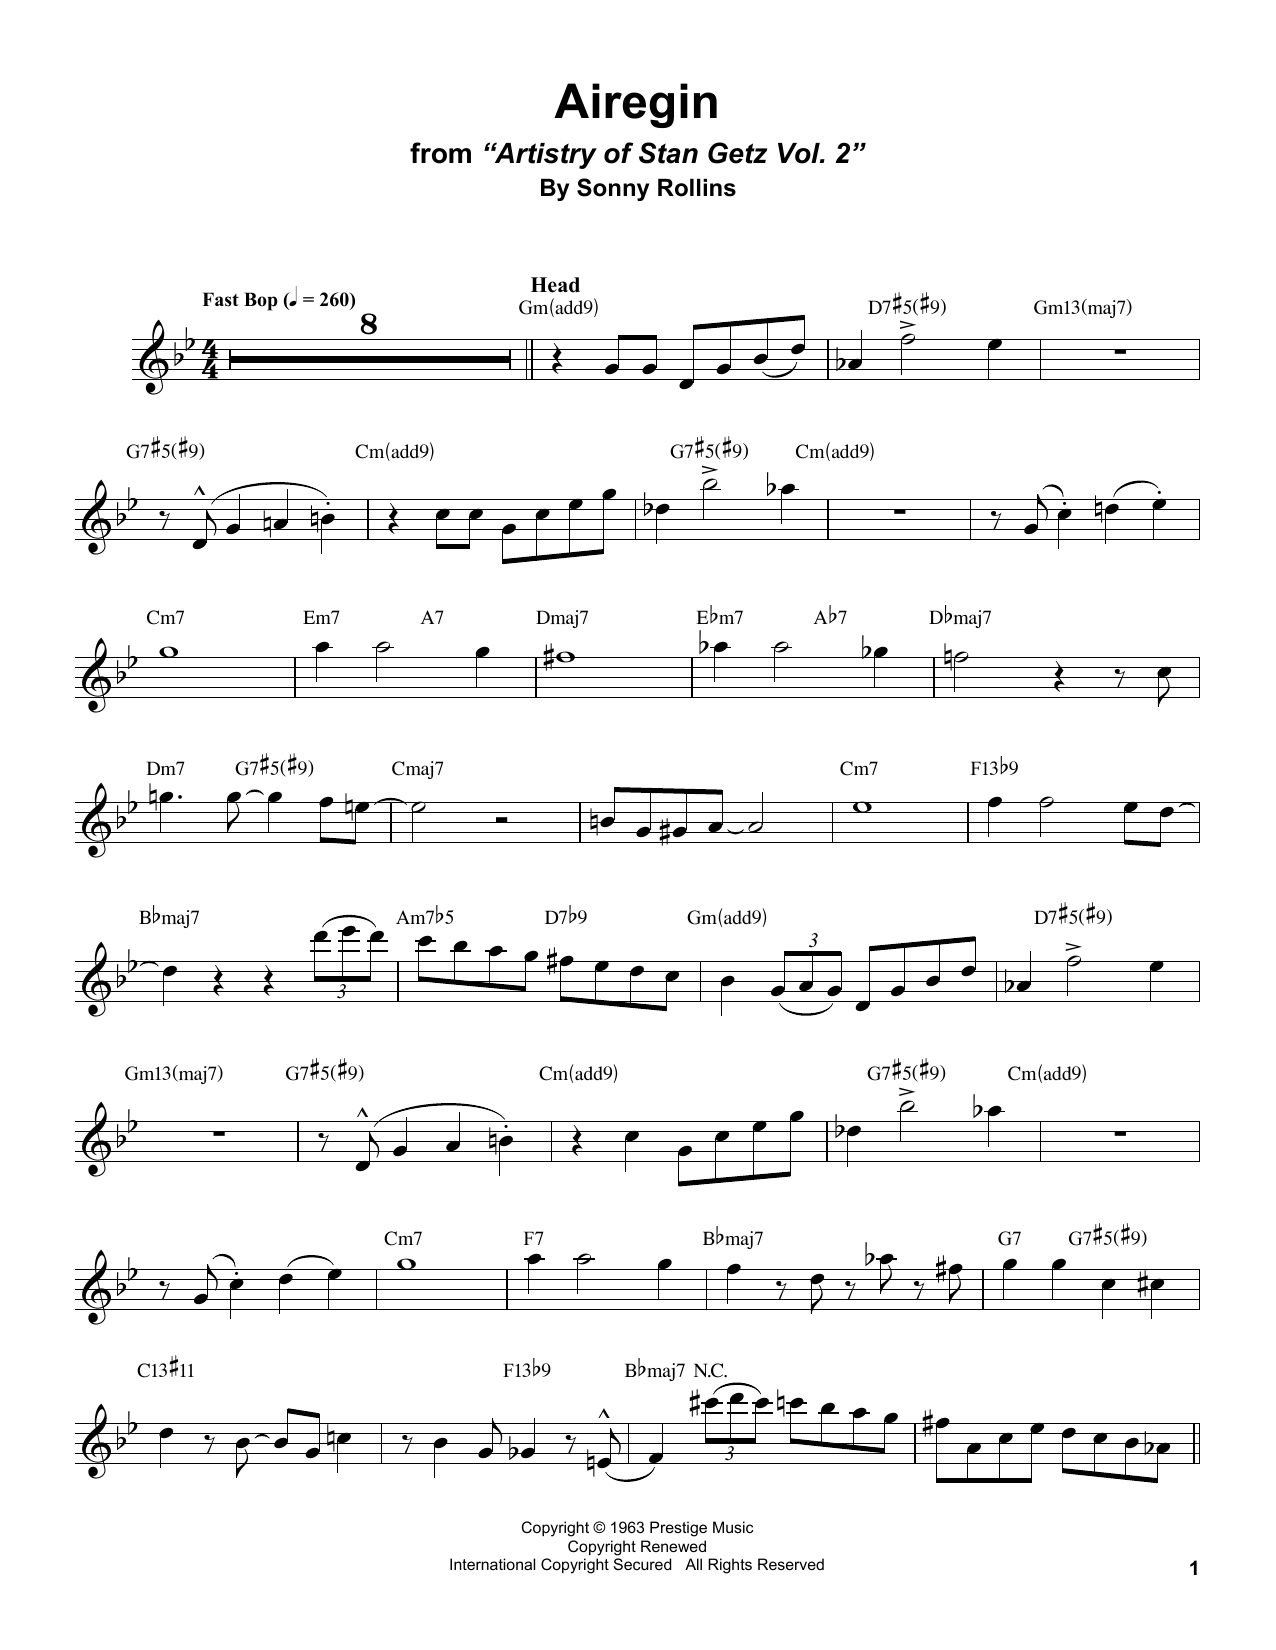 Stan Getz Airegin Sheet Music Notes & Chords for Tenor Sax Transcription - Download or Print PDF